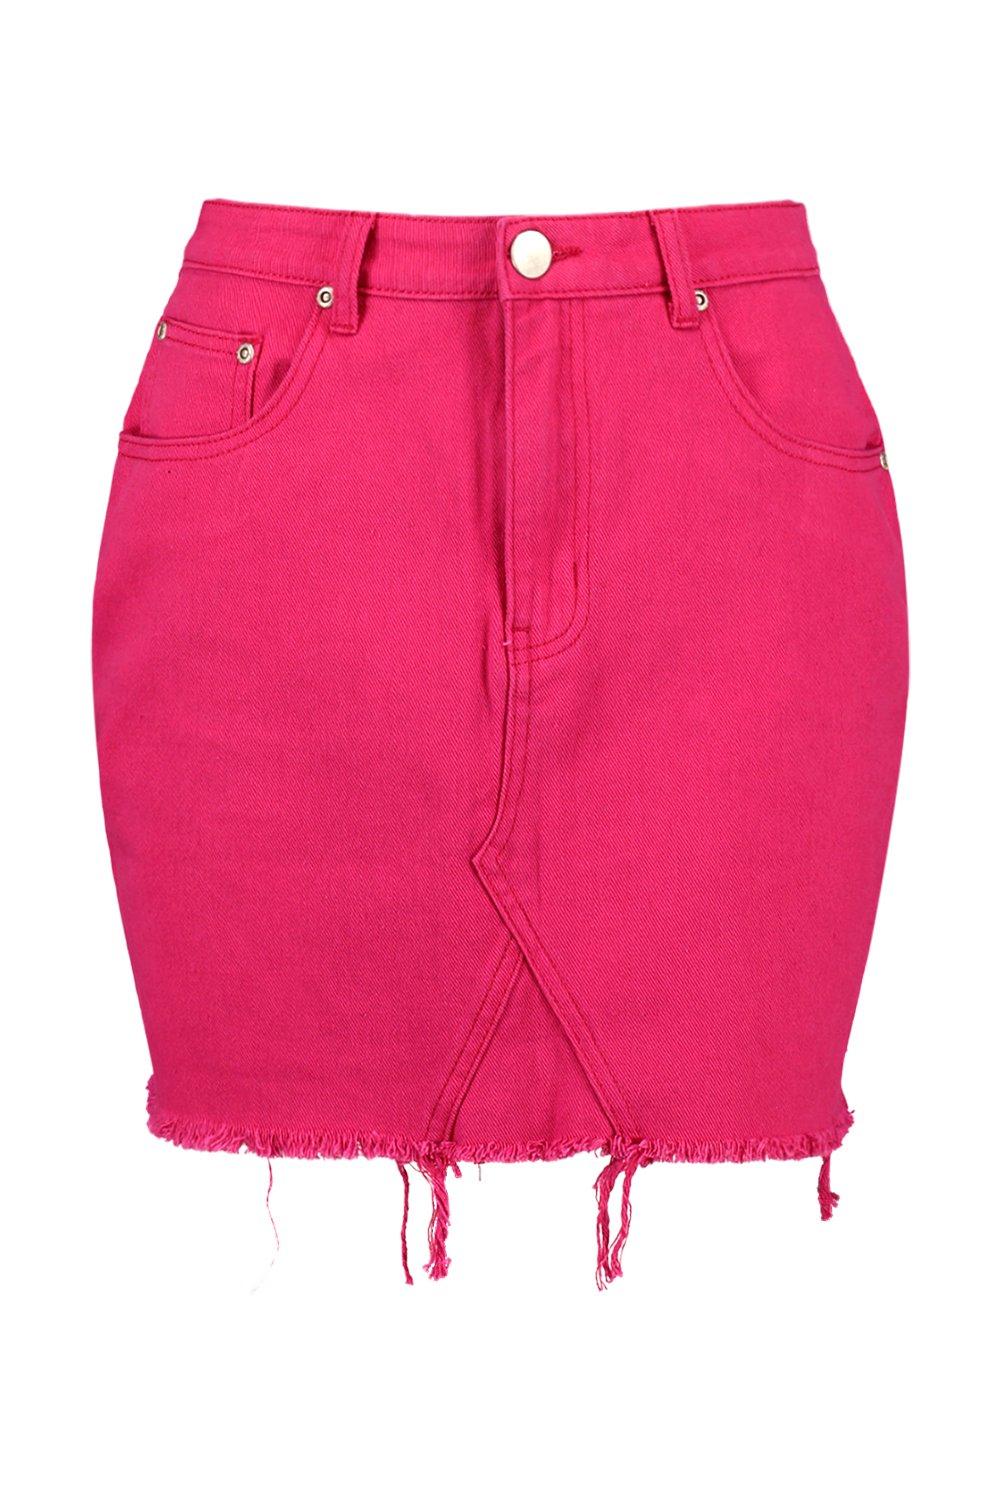 hot pink denim skirt